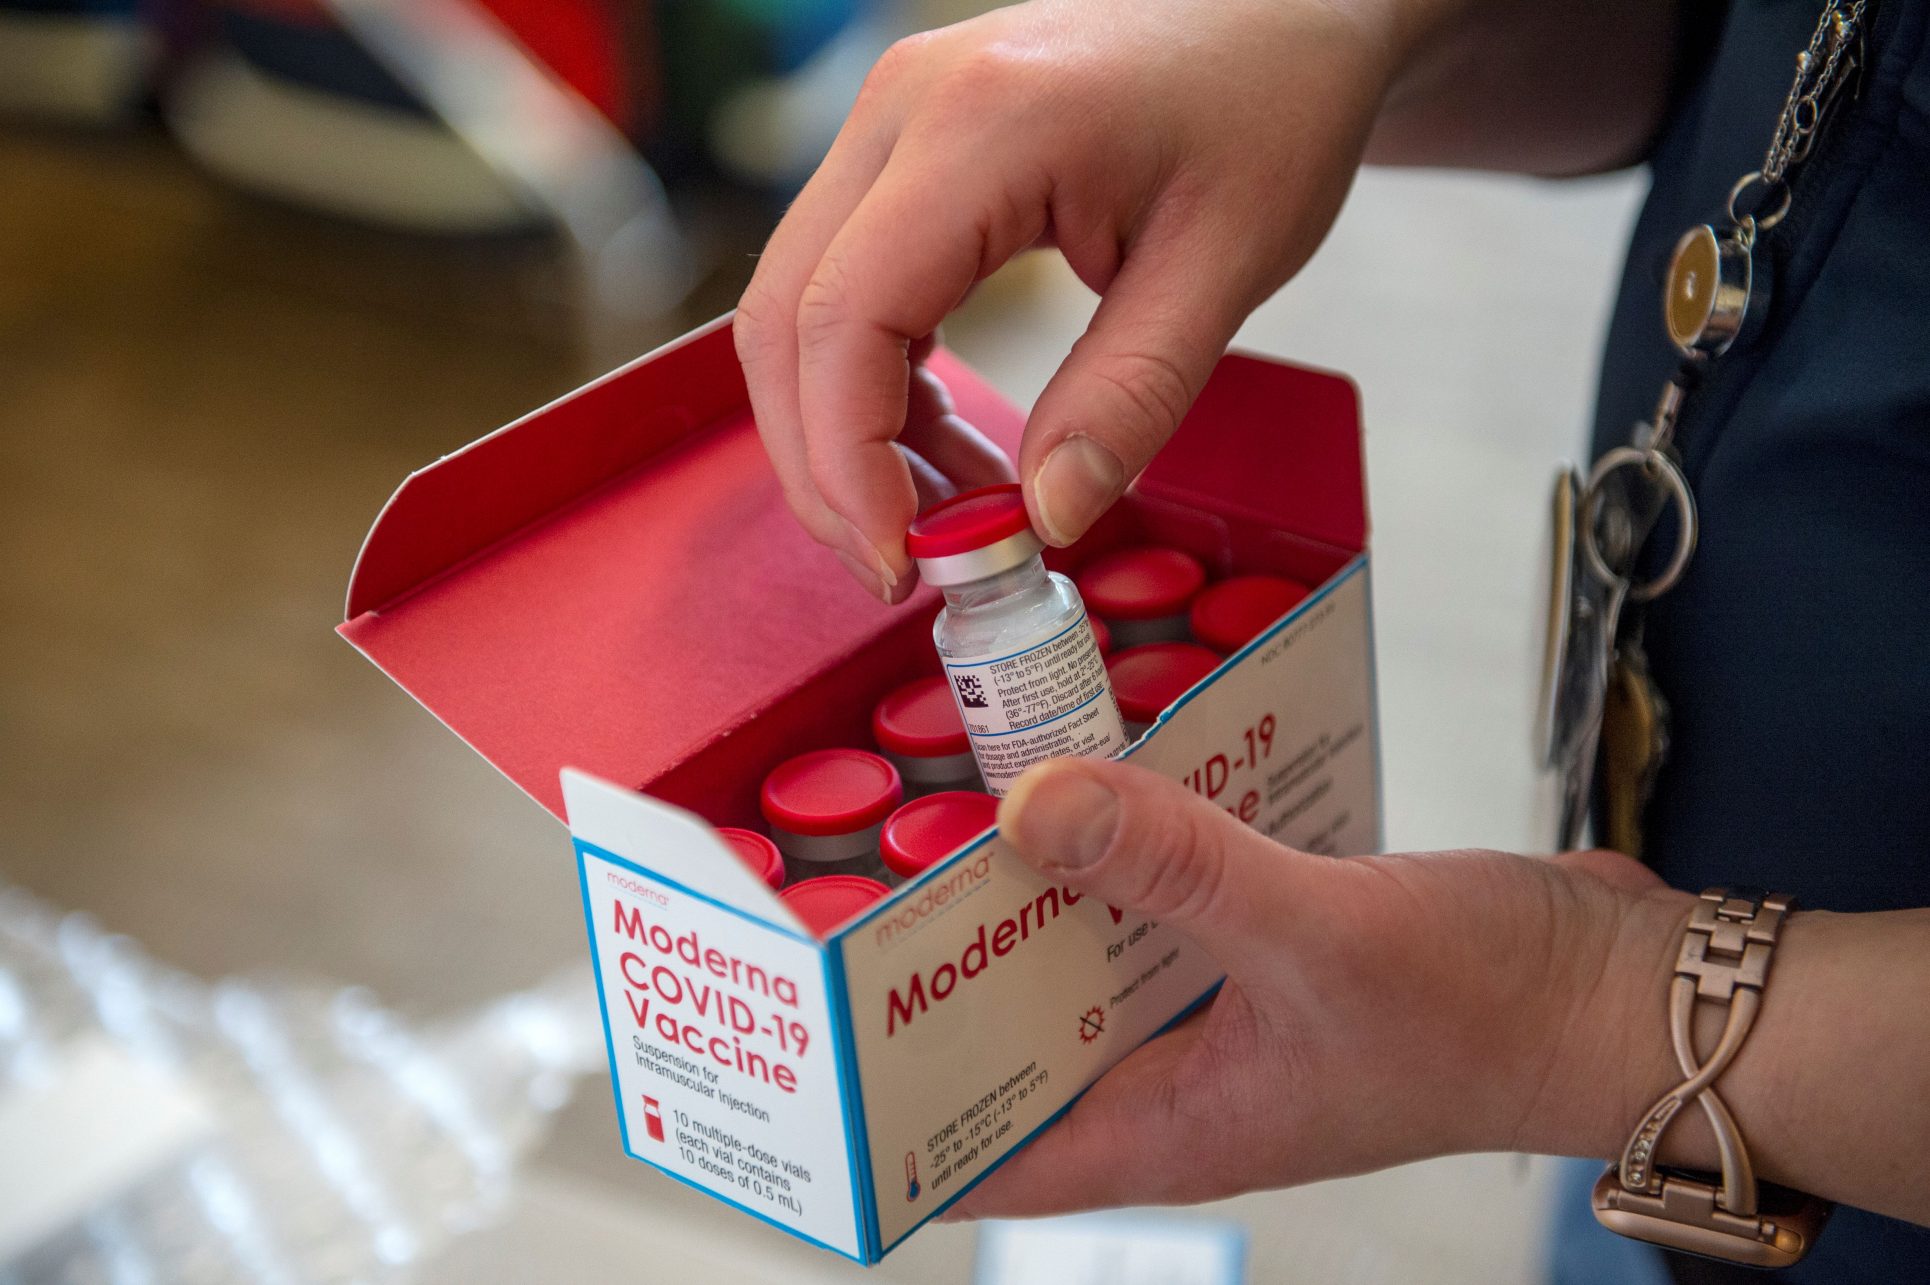 Costa Rica recibiría donación de 500.000 dosis anticovid de Moderna por parte de España